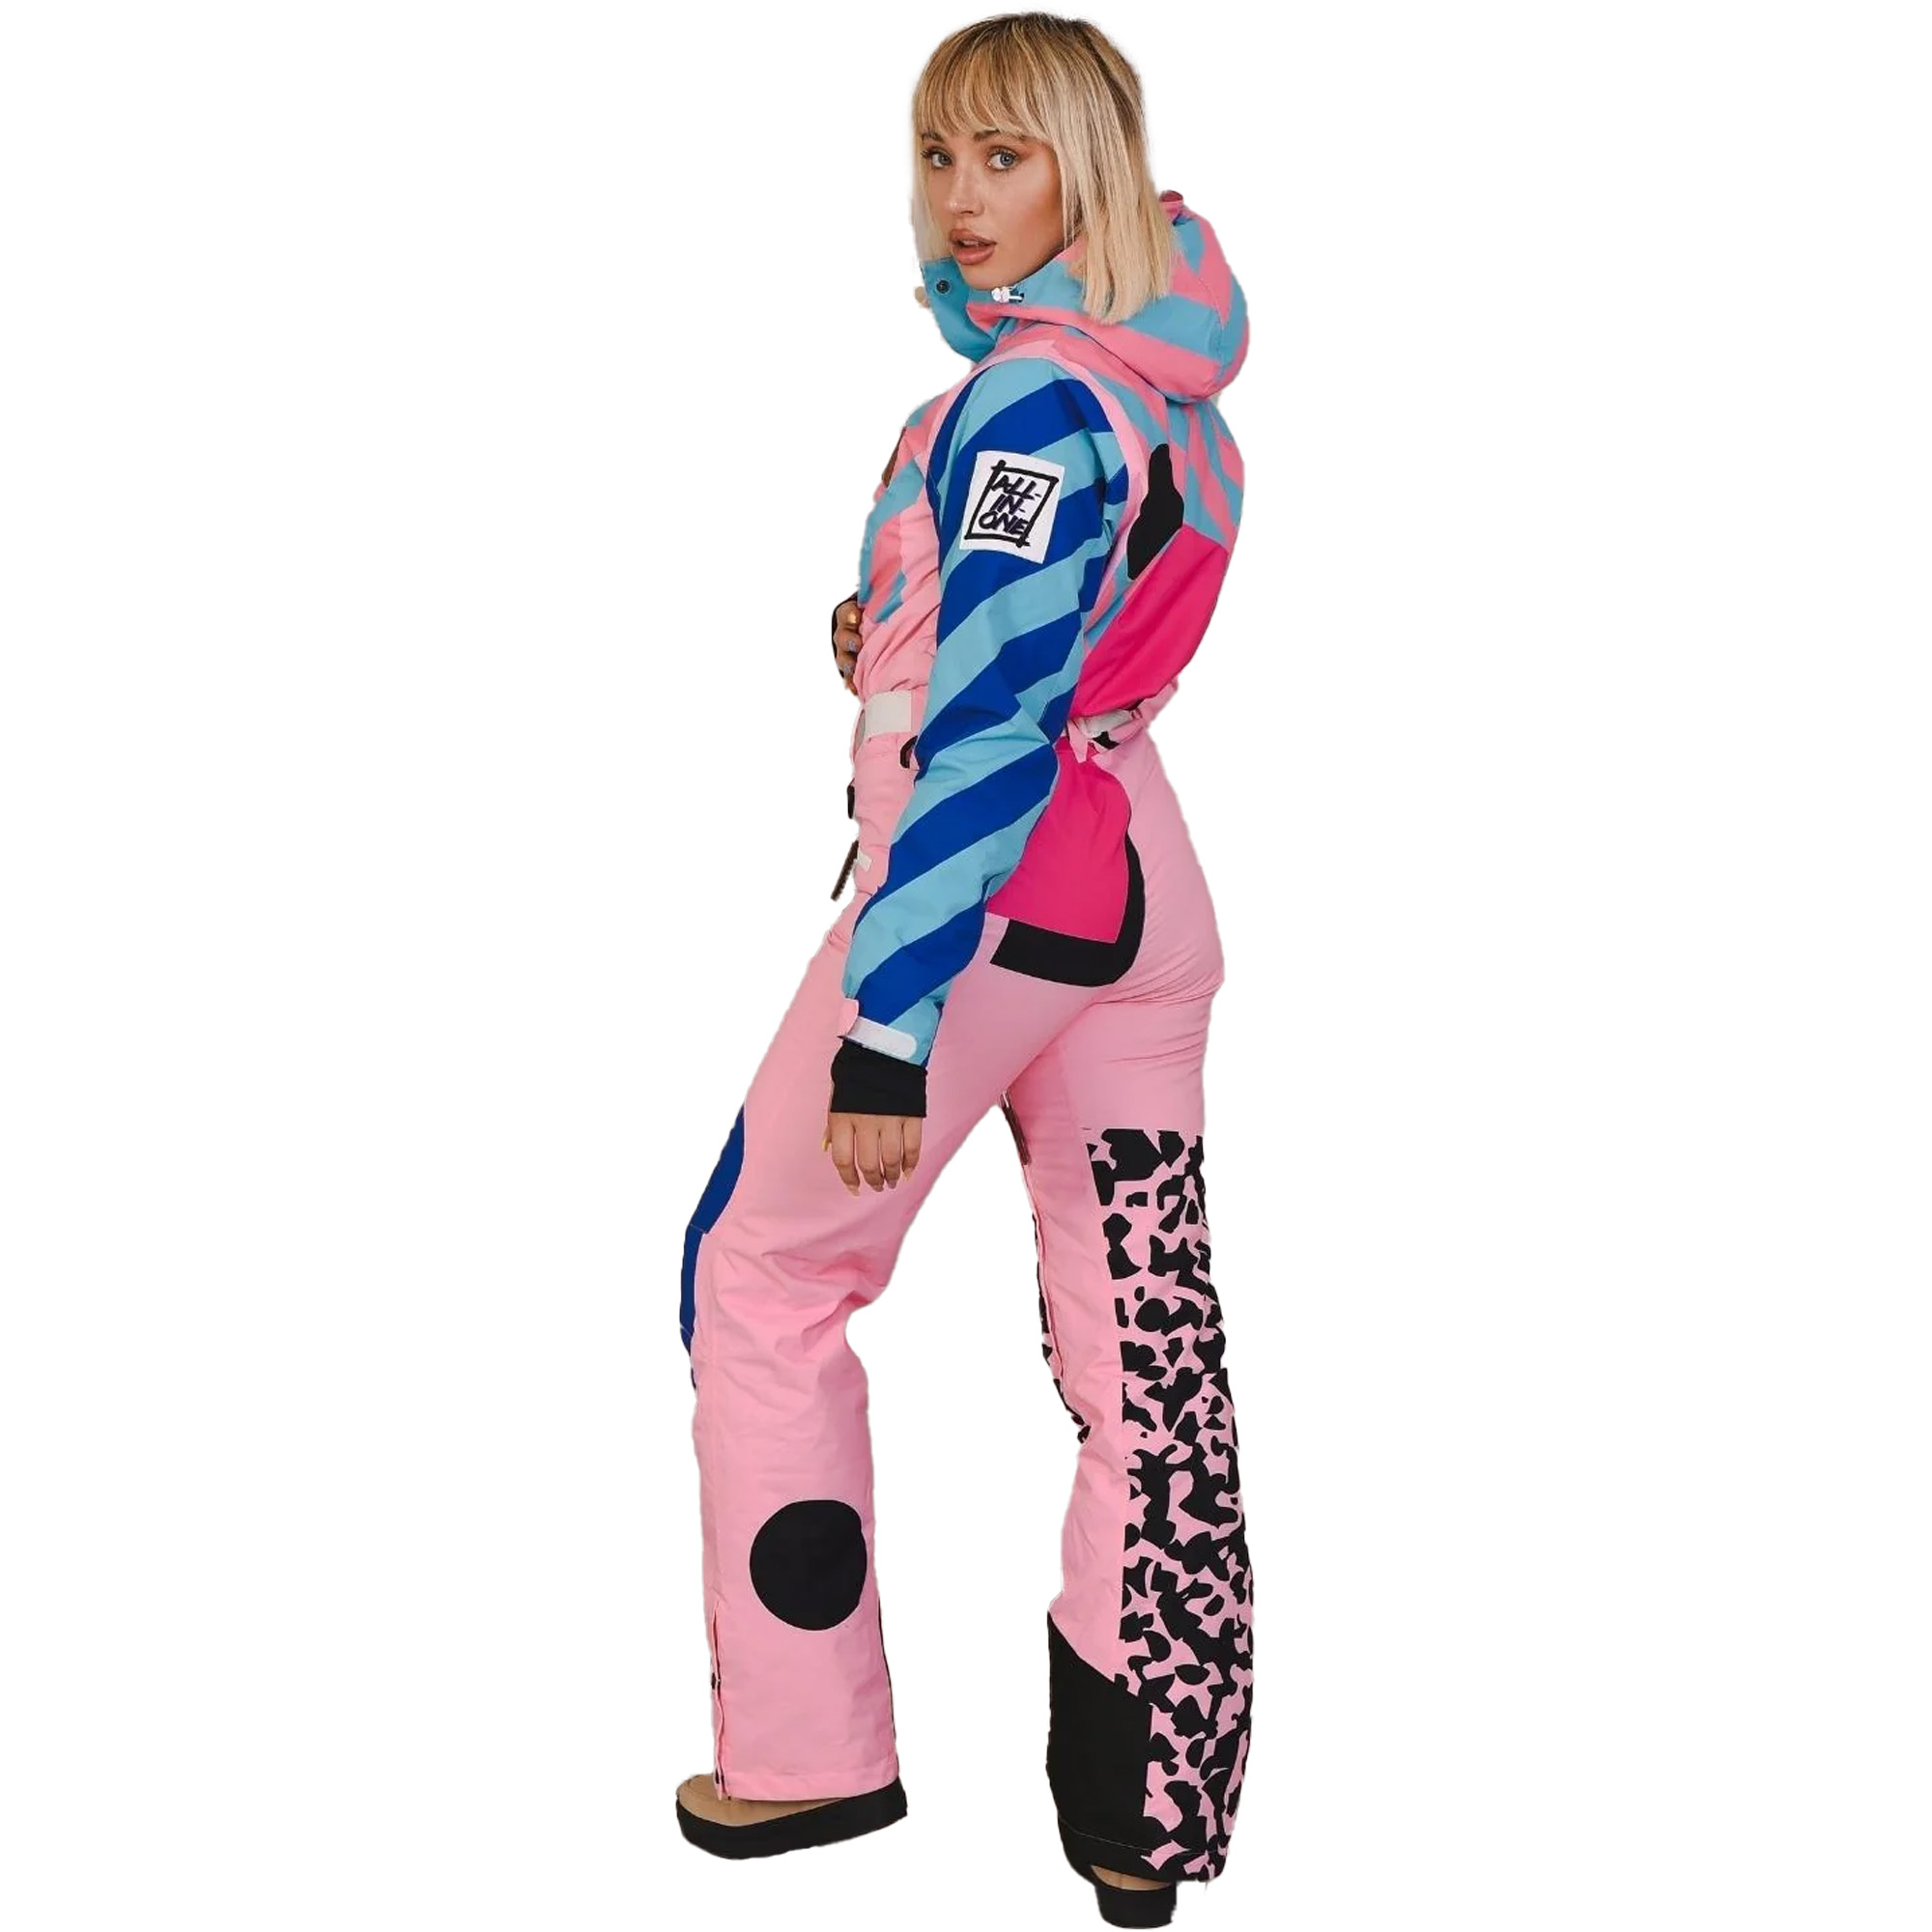 OOSC Penfold In Pink Women's One Piece Ski Suit